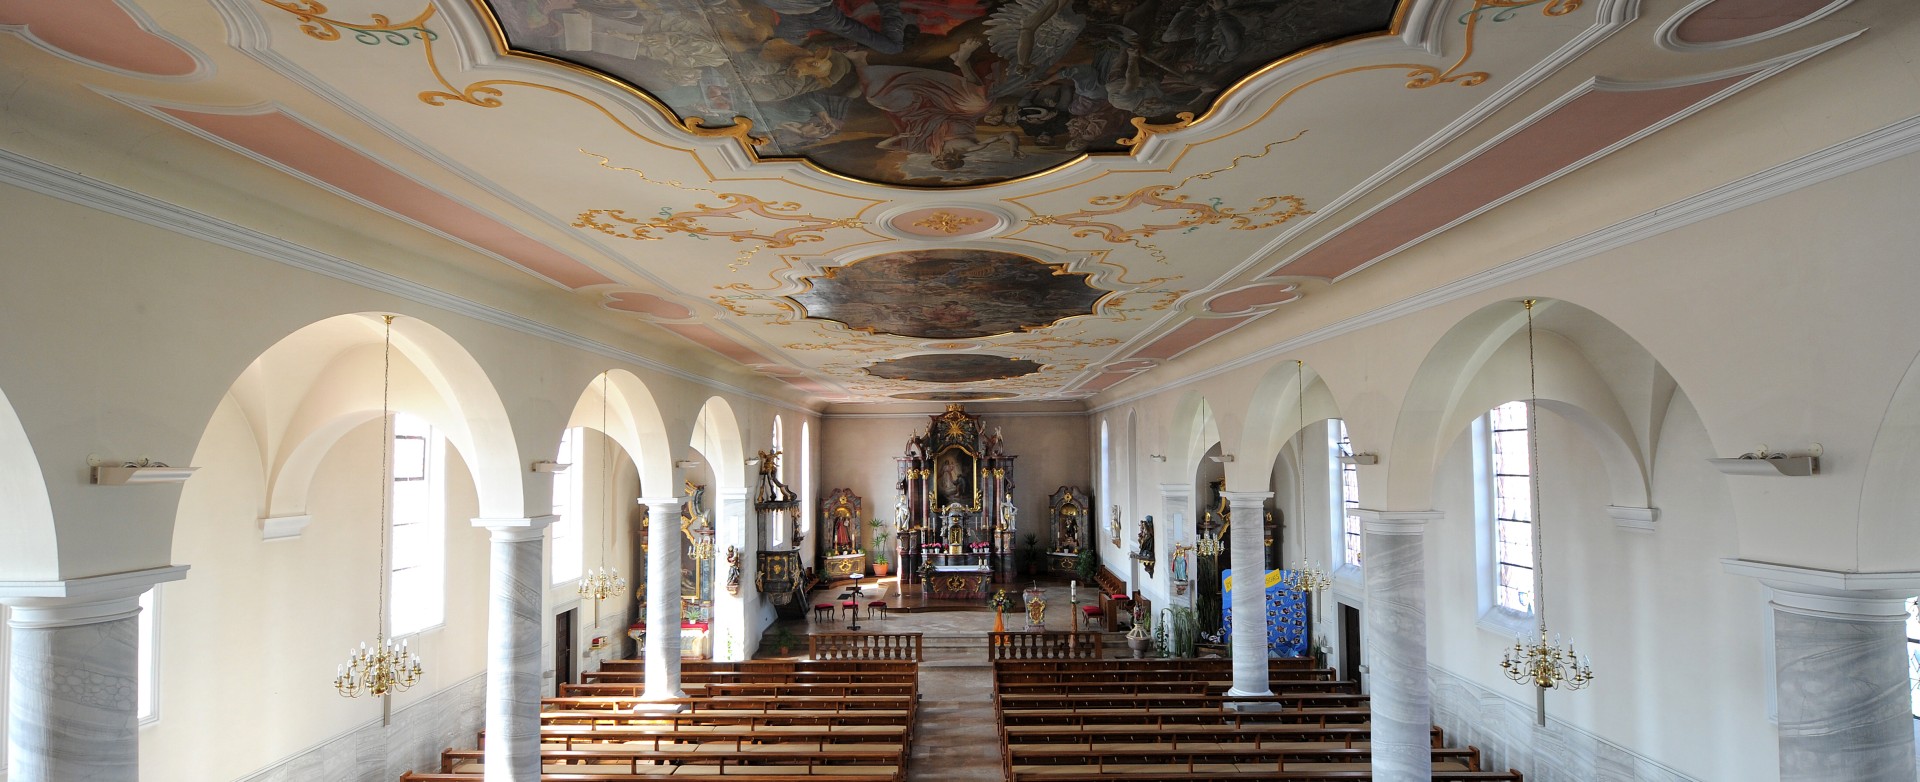 Innenraum der Pfarrkirche St. Petri in Ketten